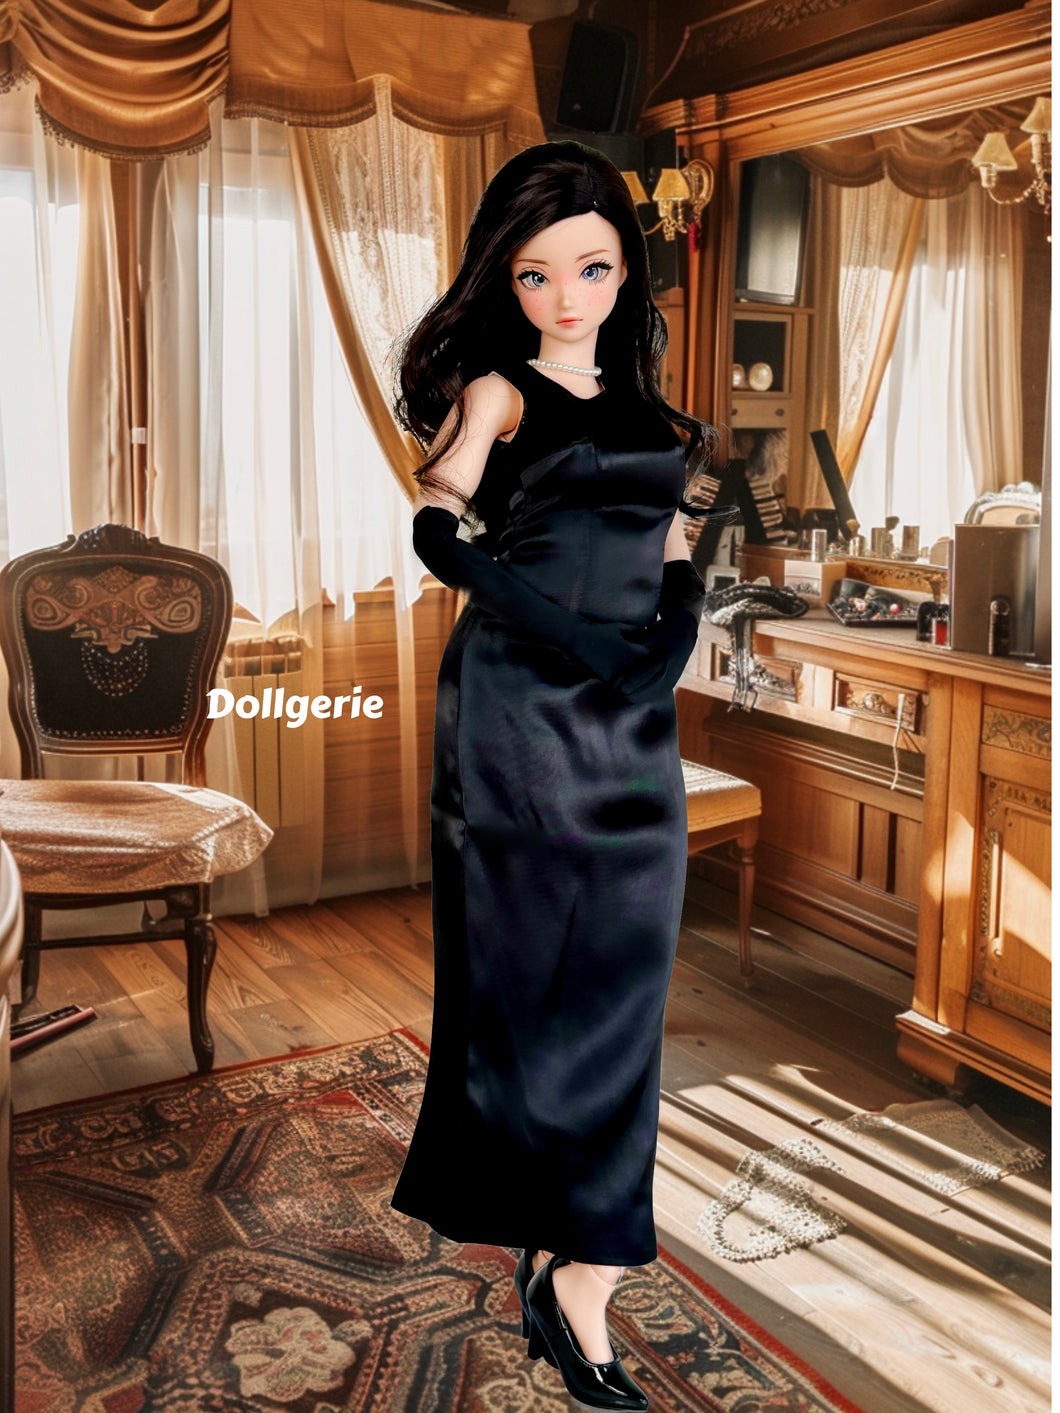 The classic Audrey Hepburn black givenchy dress